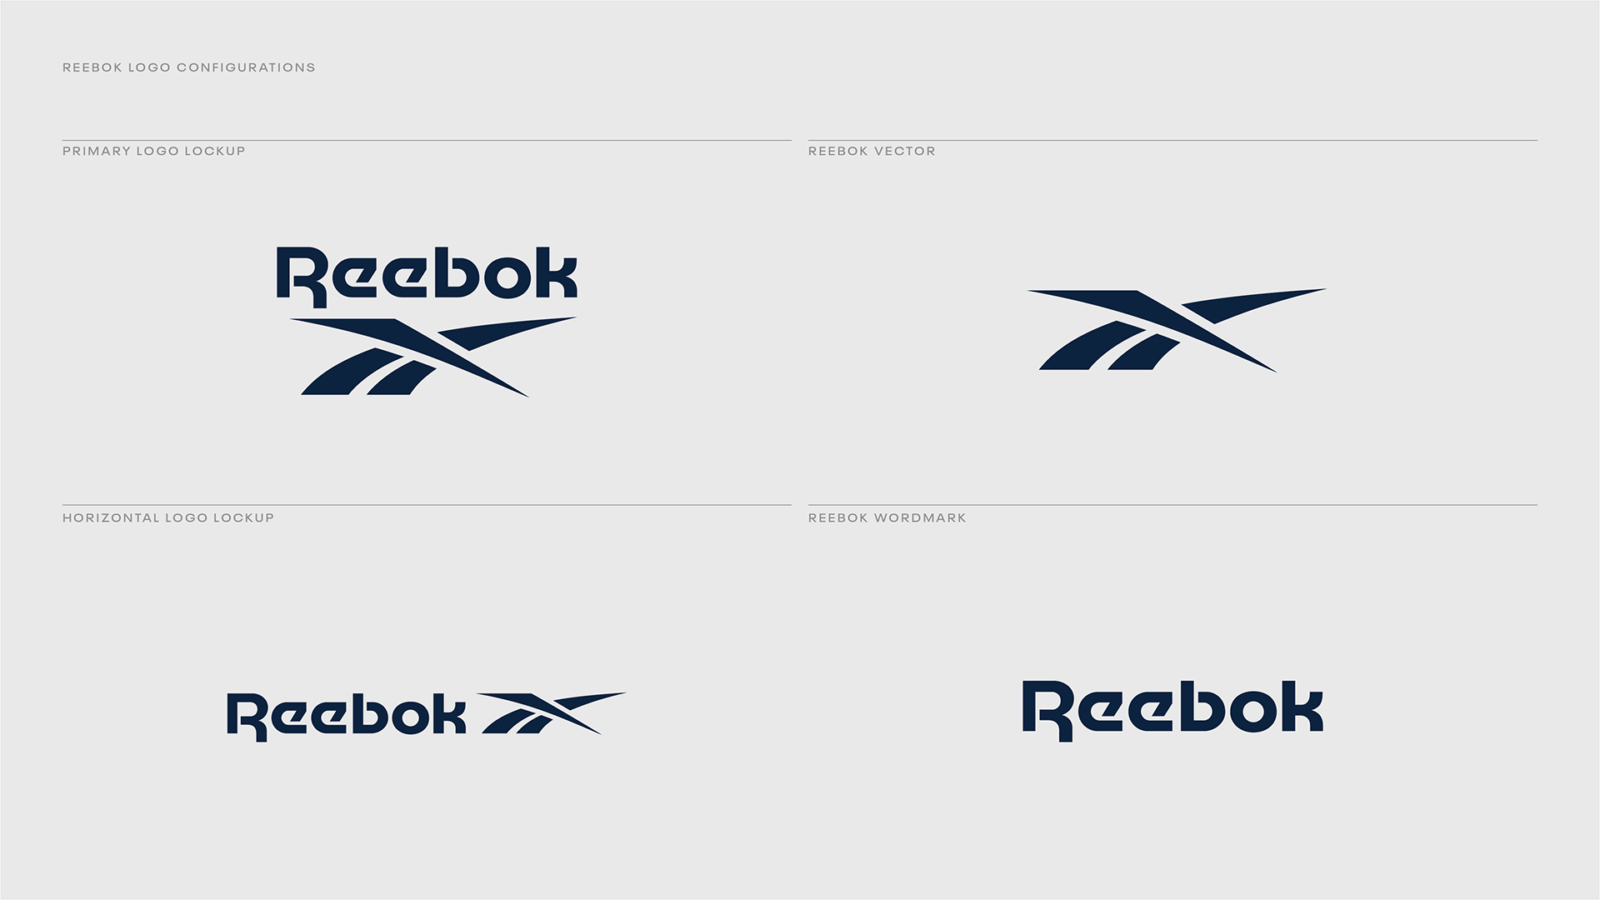 reebok 2019 logo configurations